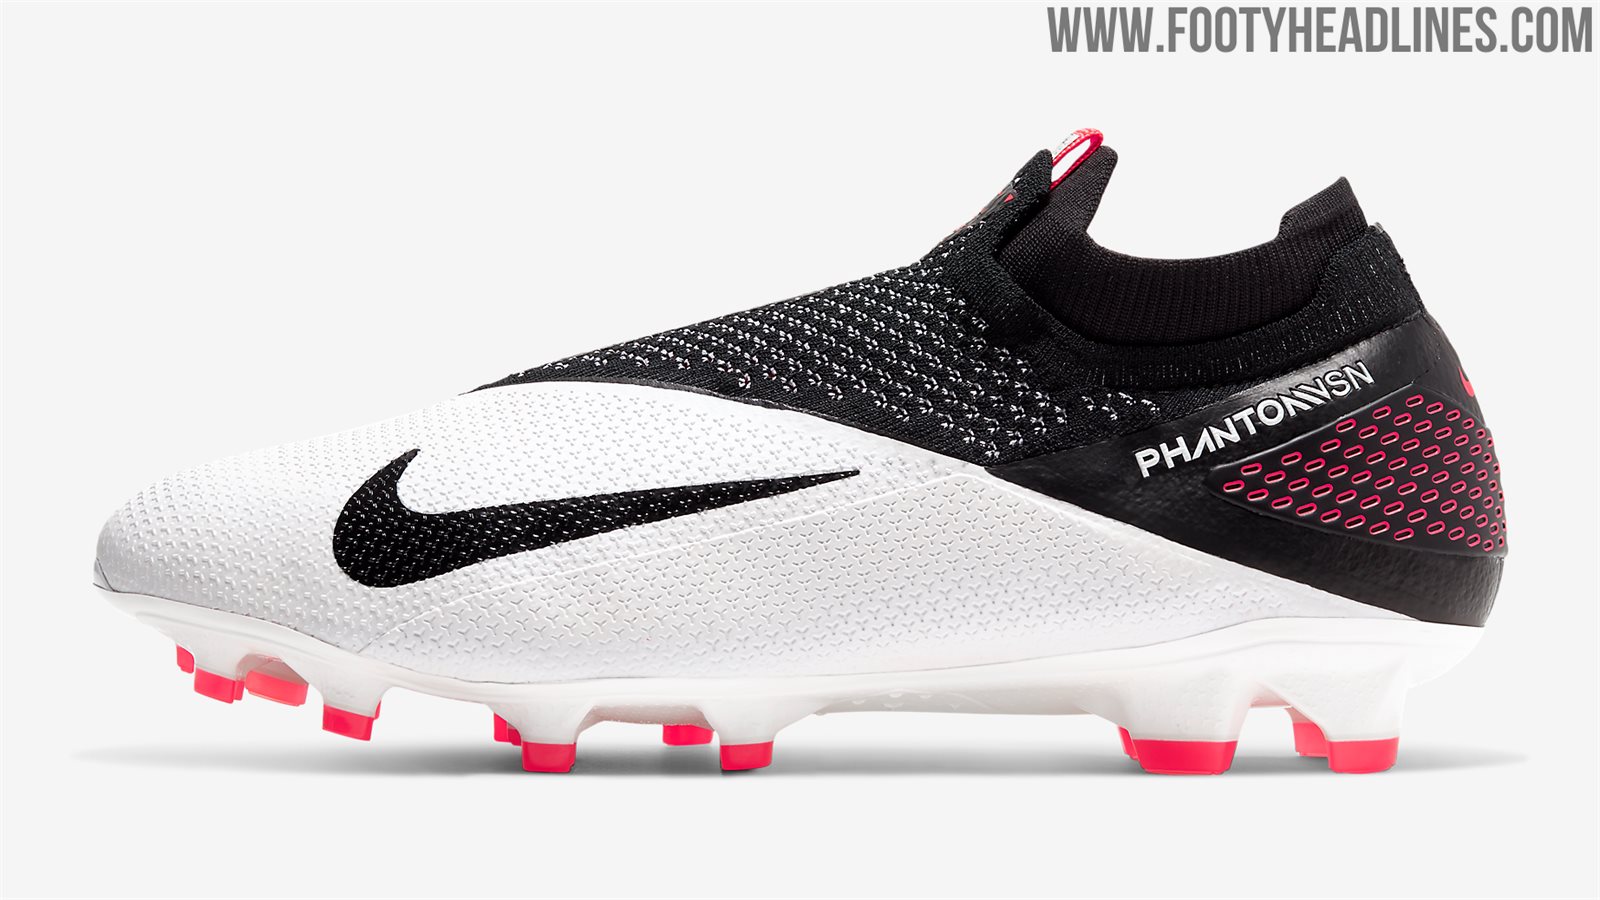 White / Black / Red Nike Phantom Vision 2 Boots Released - 